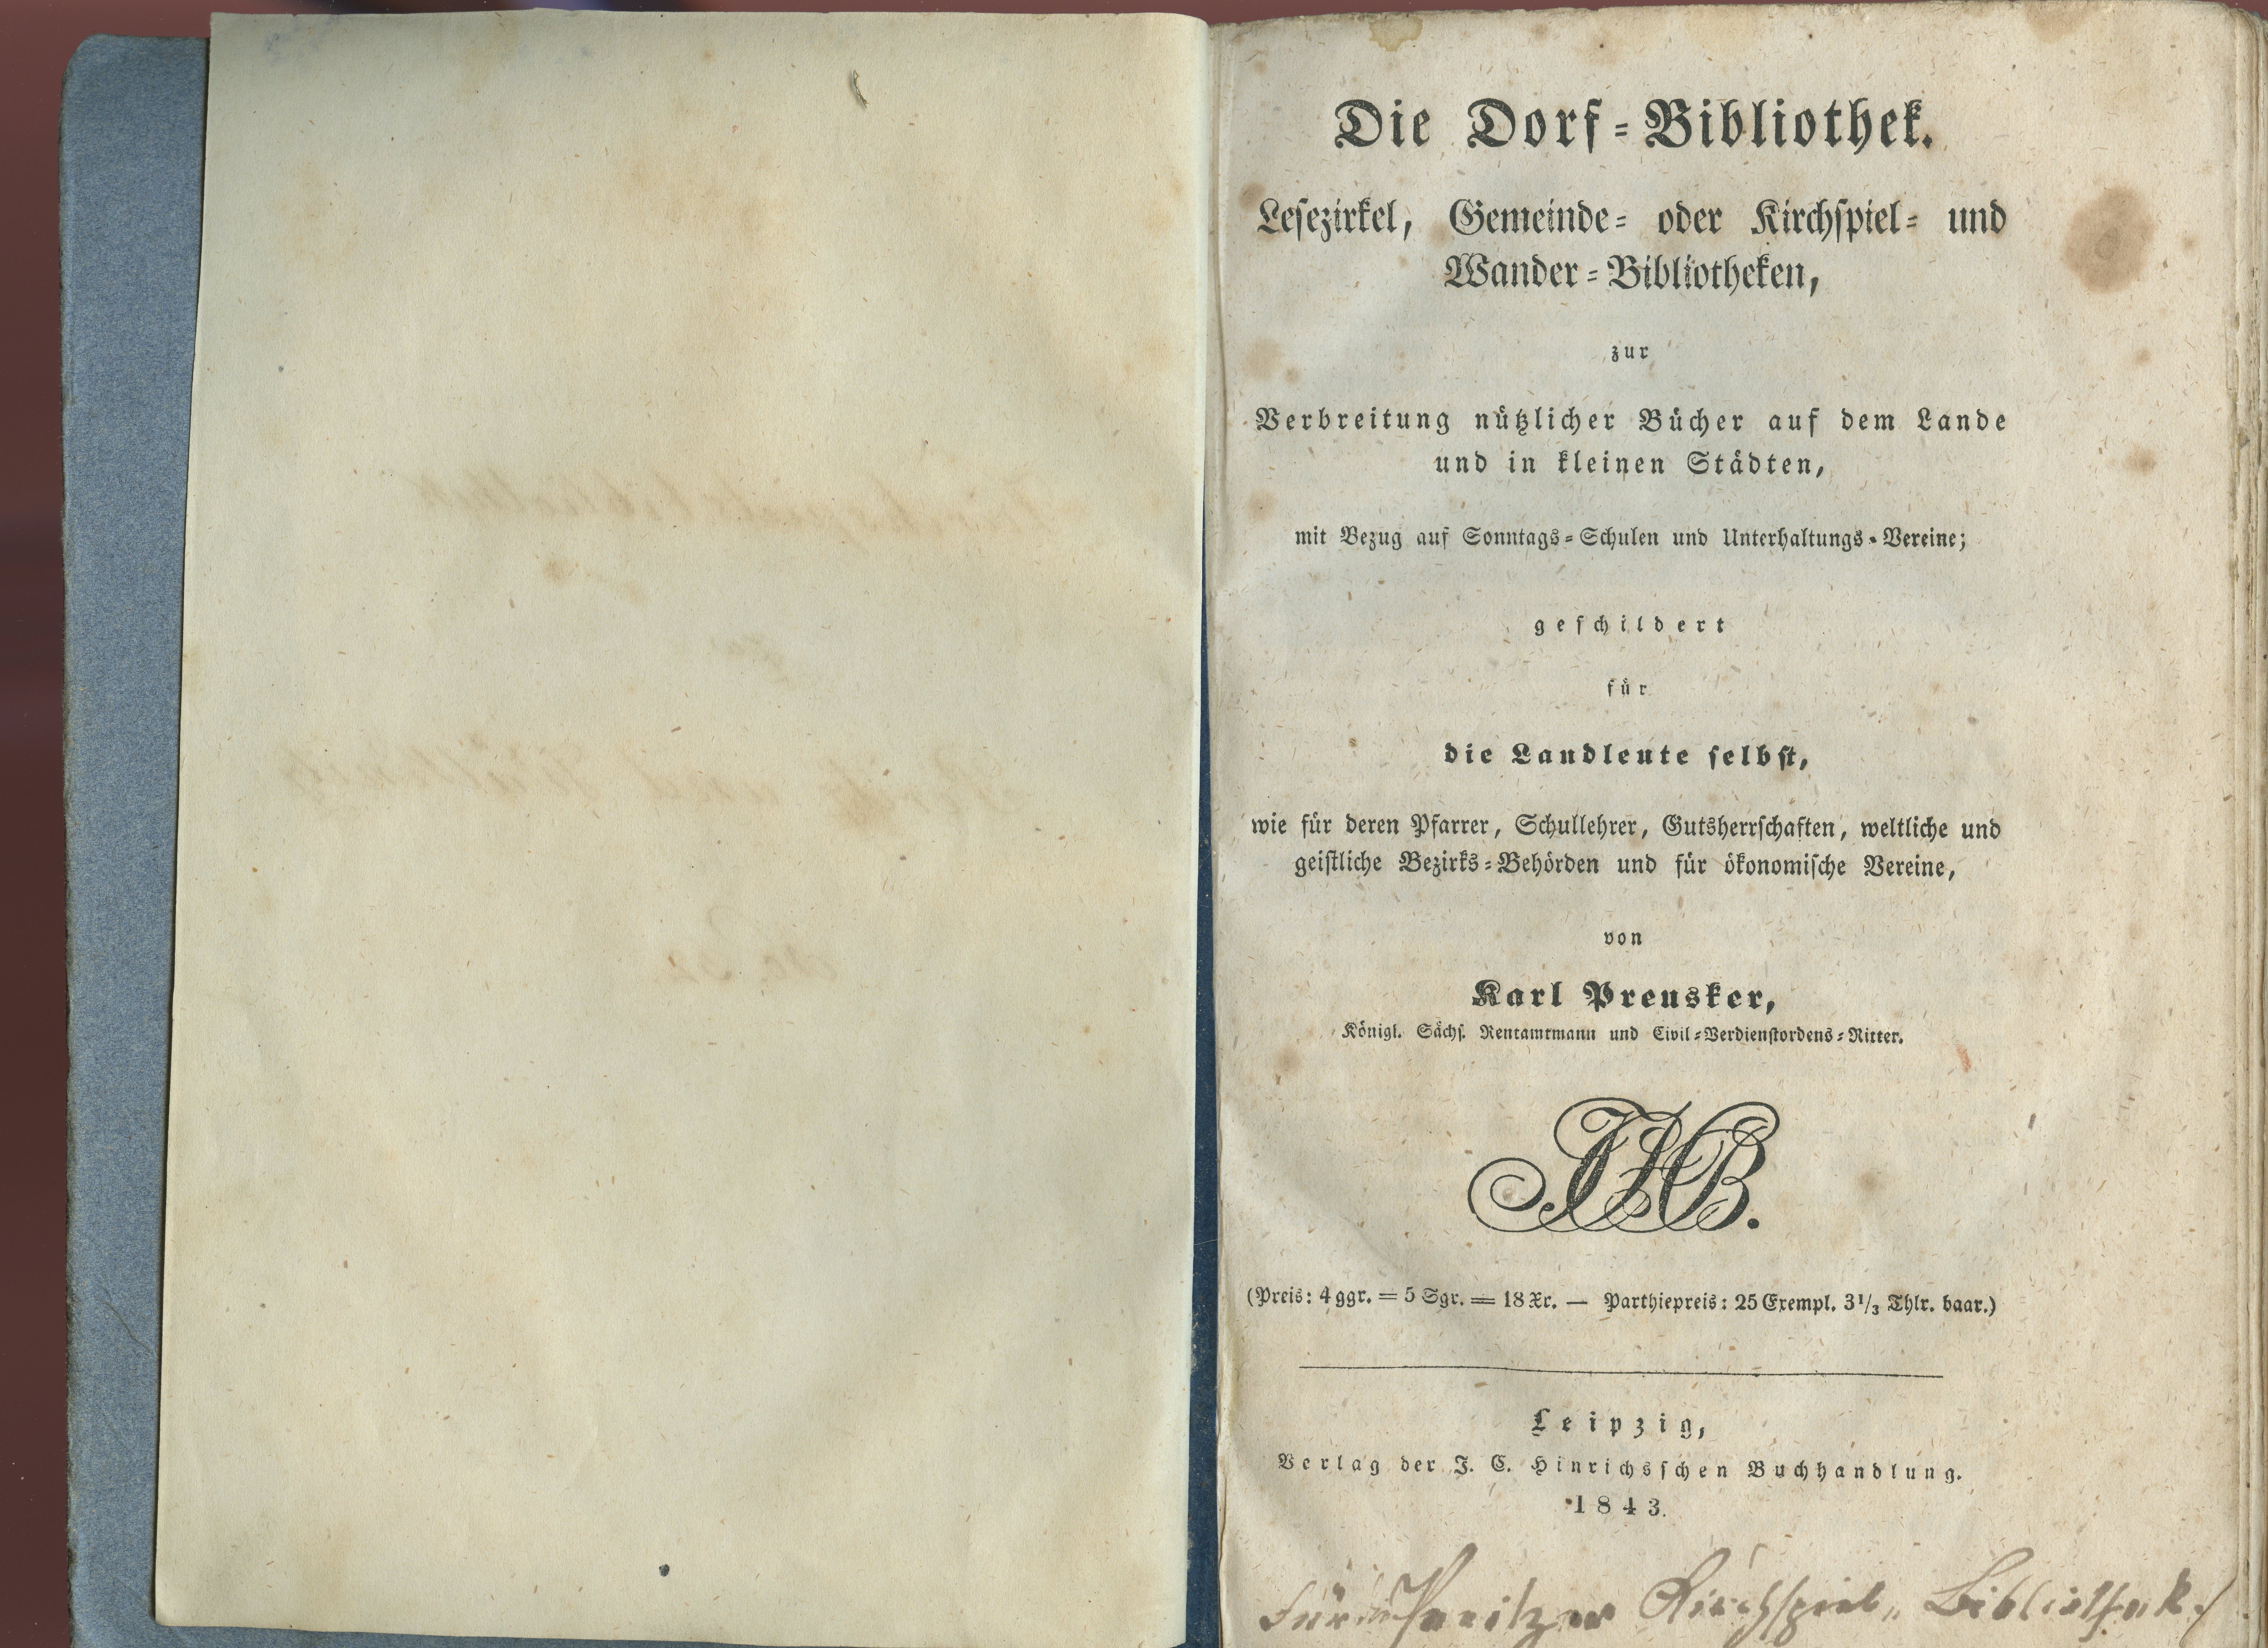 Preusker, Karl: Die Dorf-Bibliothek [...], 1843 (Museum Alte Lateinschule CC BY-NC-SA)